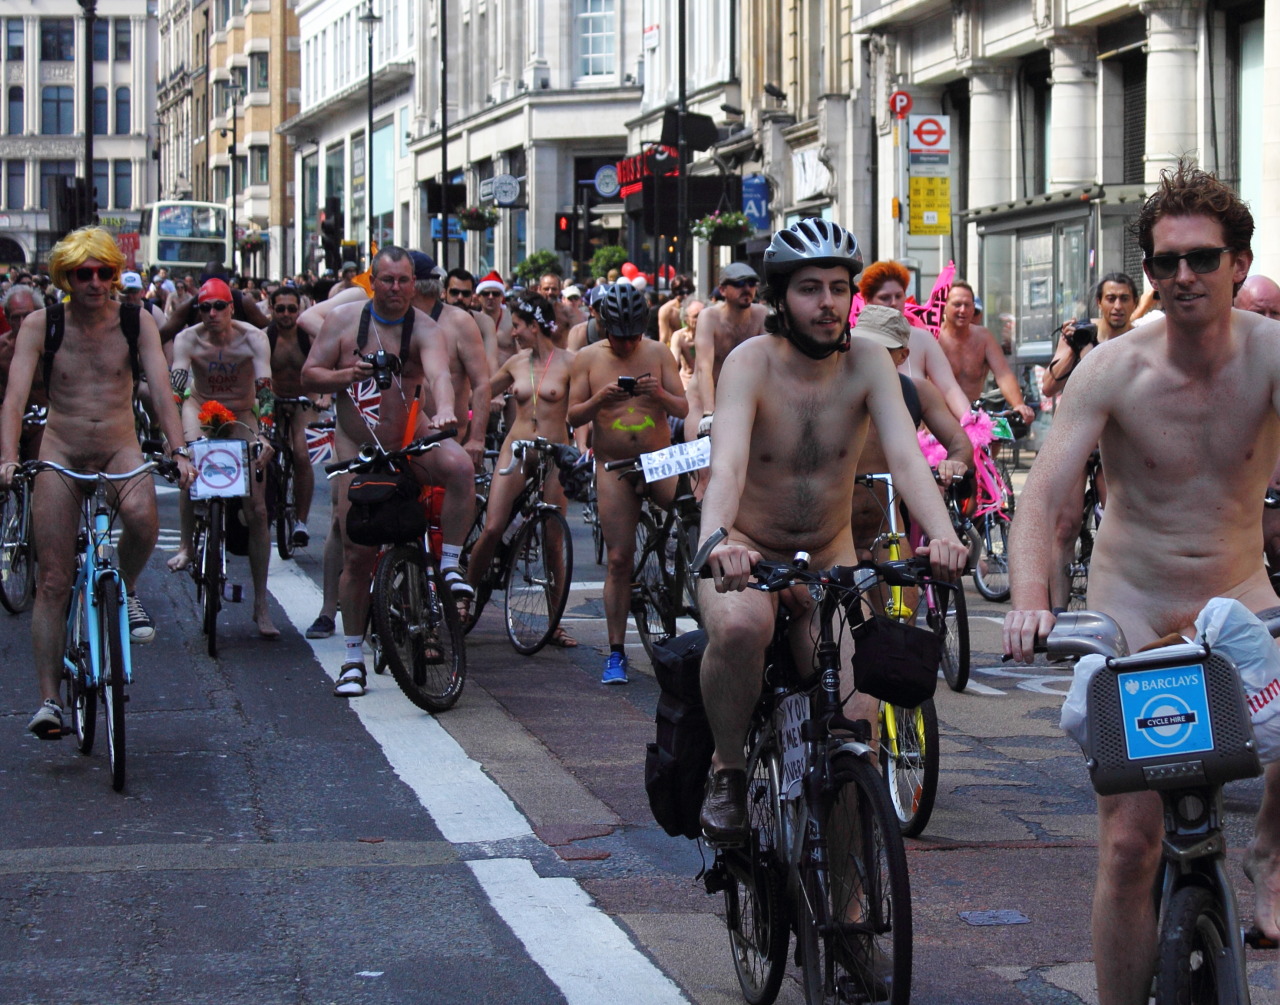 Naked Bike RideÂ  jegography:  On Saturday I went to the London World Naked Bike